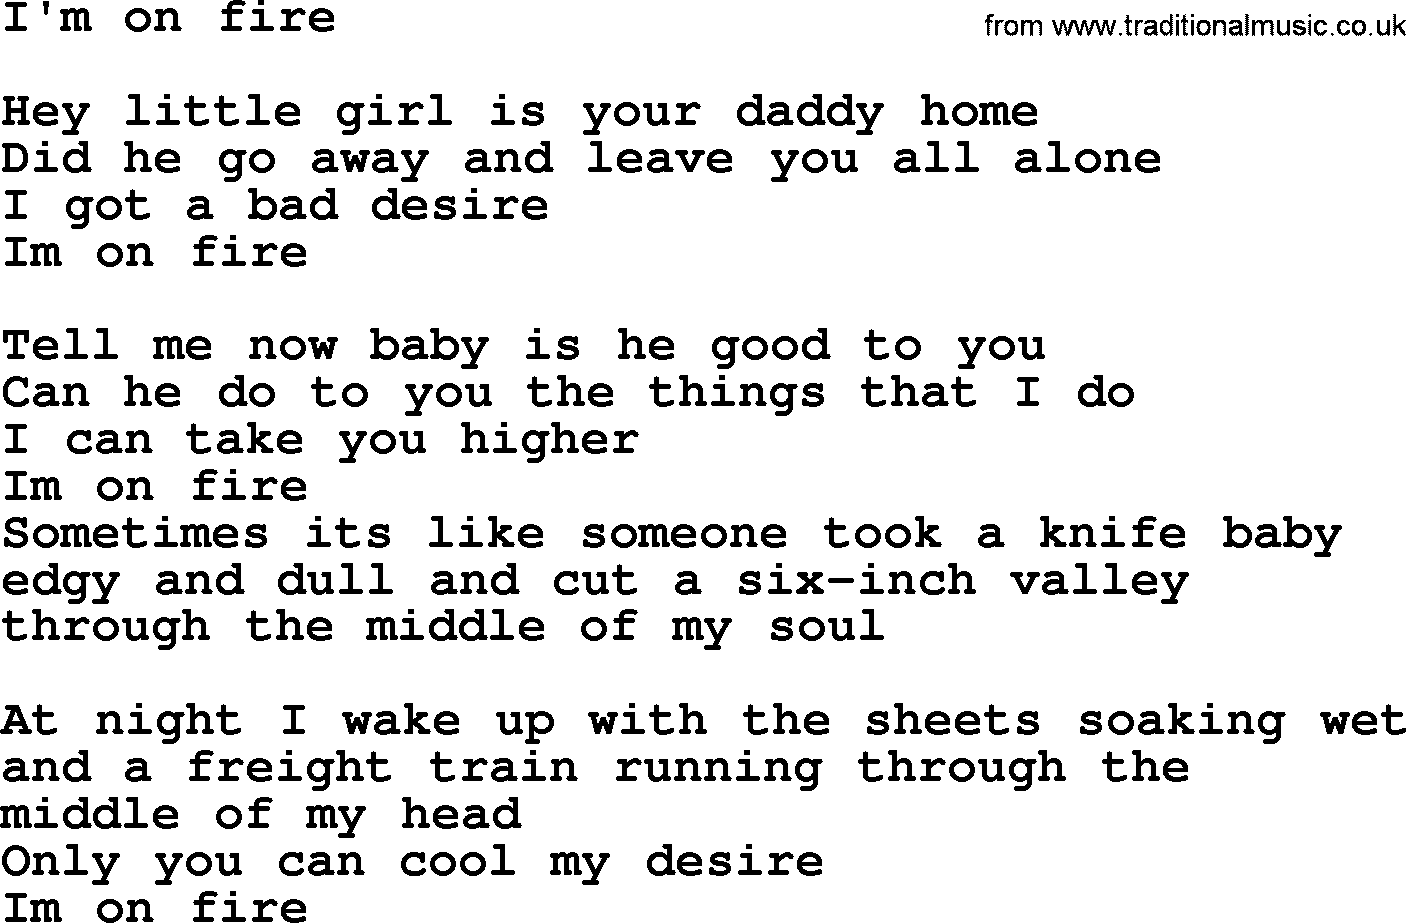 Bruce Springsteen song: I'm On Fire lyrics